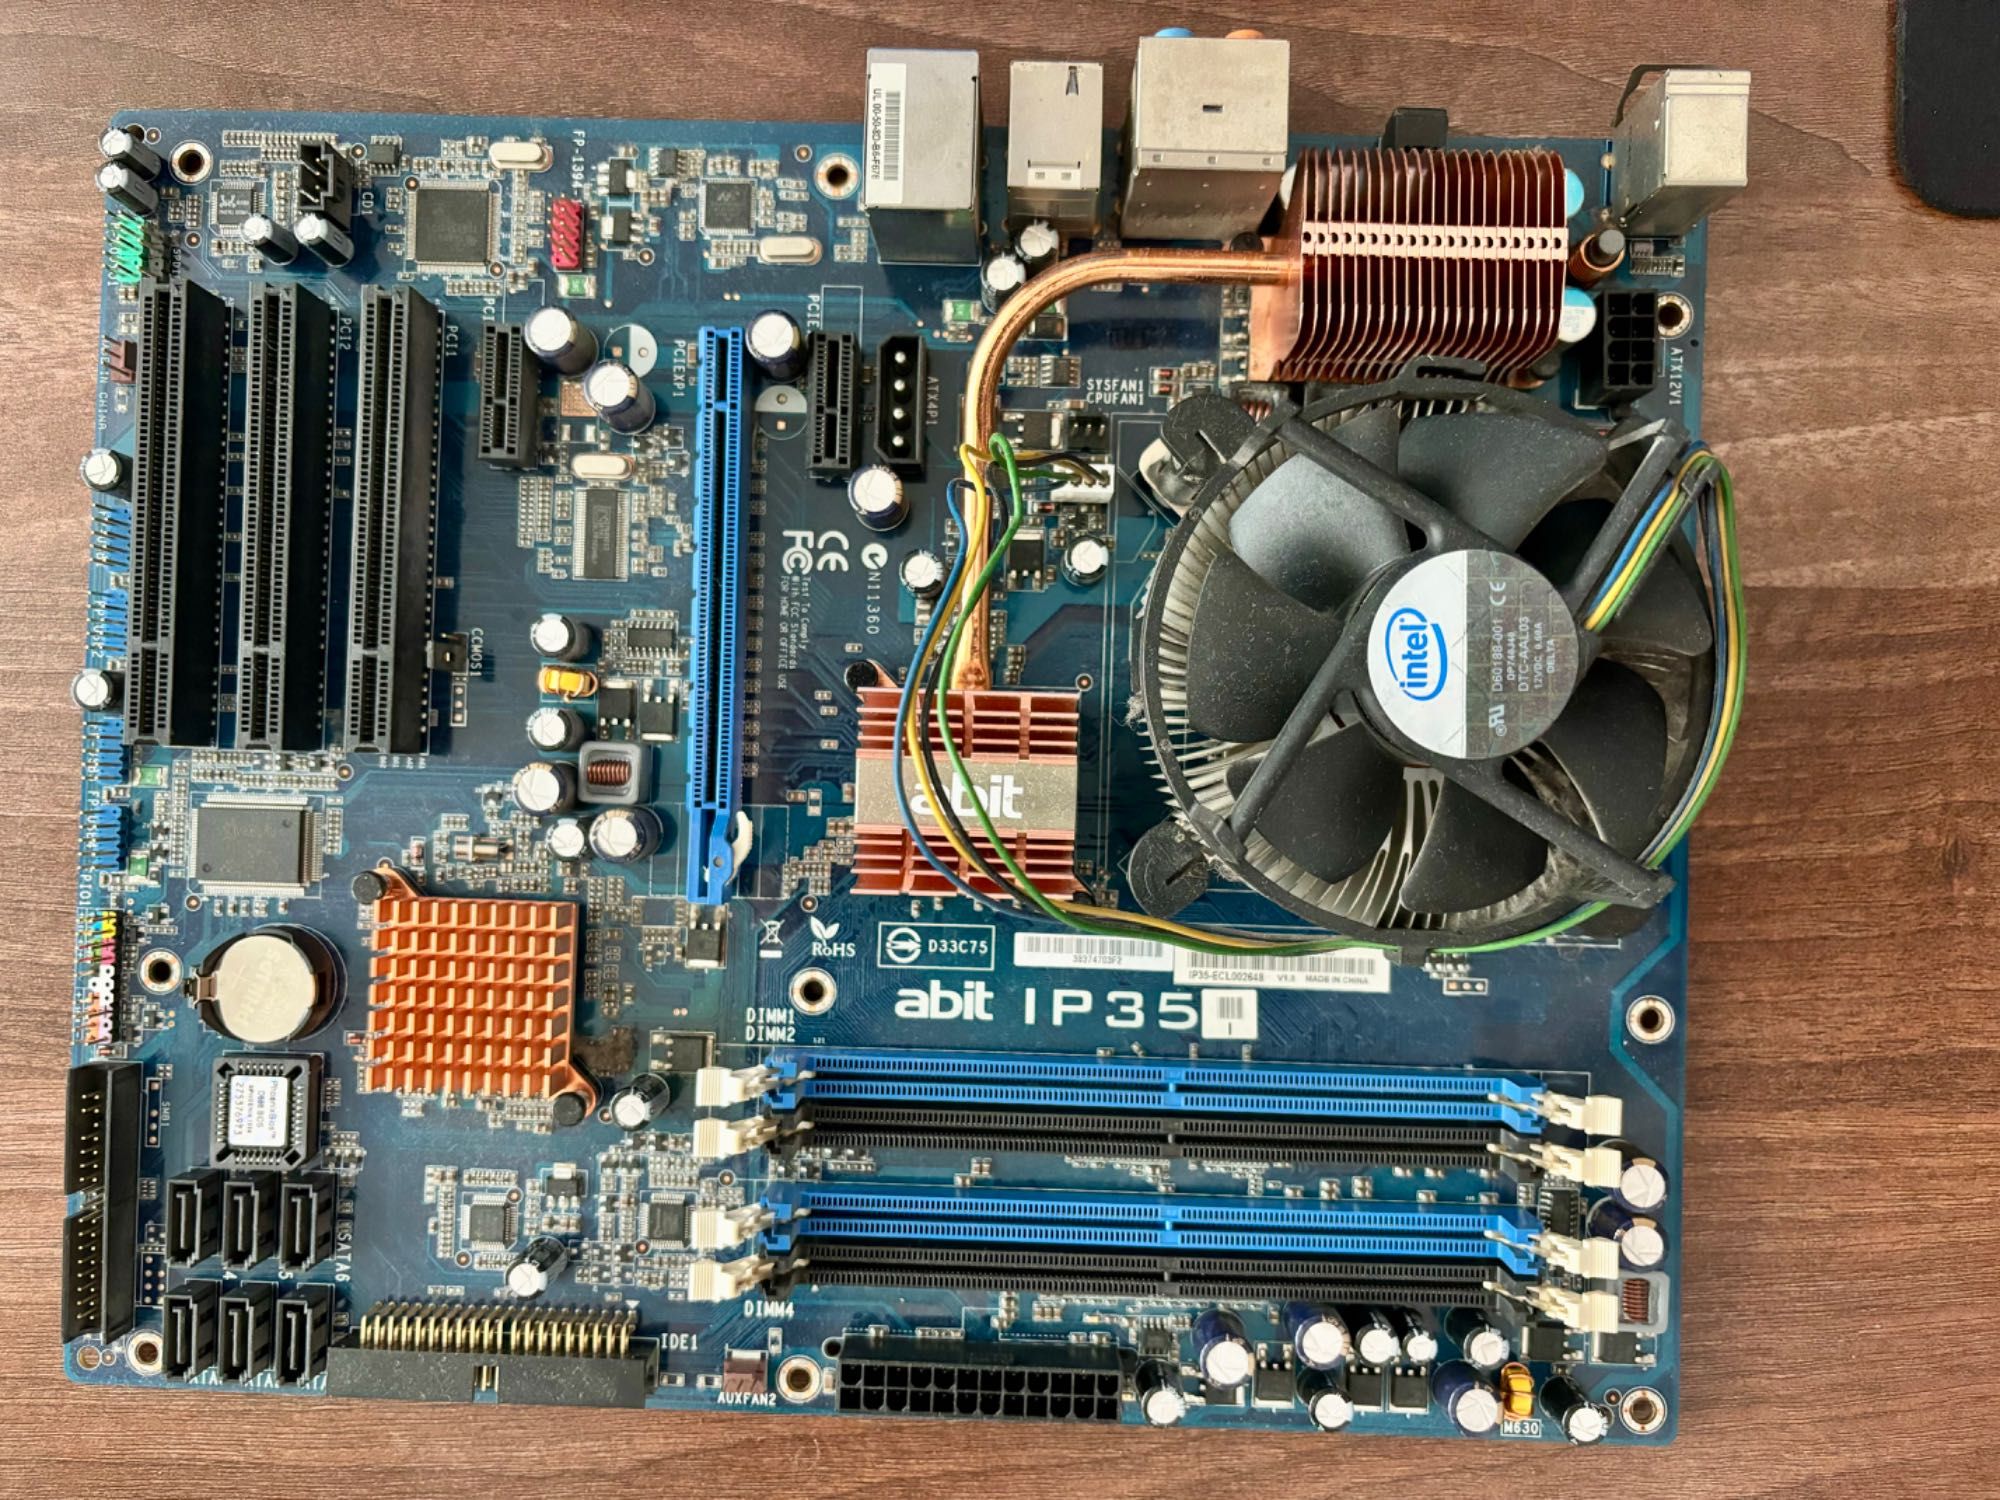 PC - procesor Intel Core2 Quad Q6600 2.4GHz, Abit IP35, ATI 1 GB, 6 GB